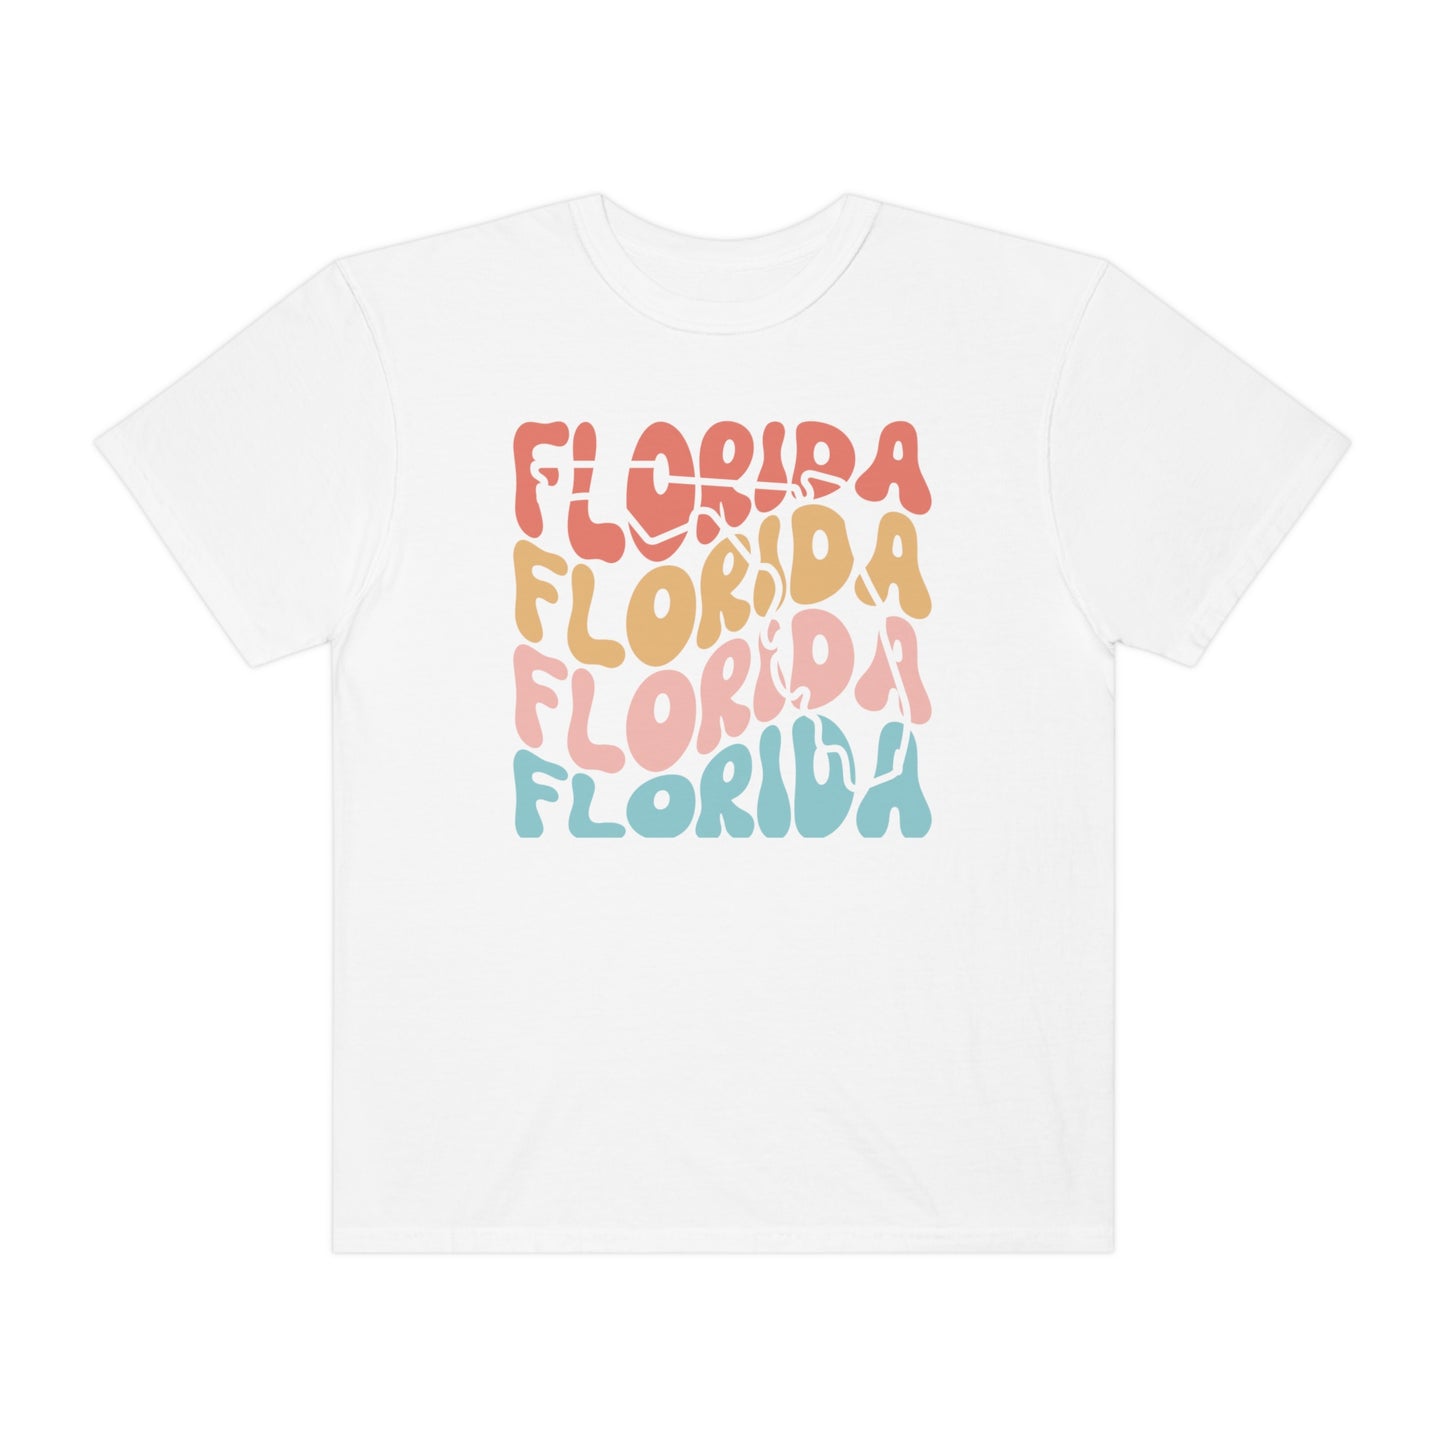 Florida State Shirt, Florida Travel Shirt, Florida Gifts, Beach Vacation TShirt, Summer Clothing, FL Sports Shirt, Retro Florida Graphic Tee